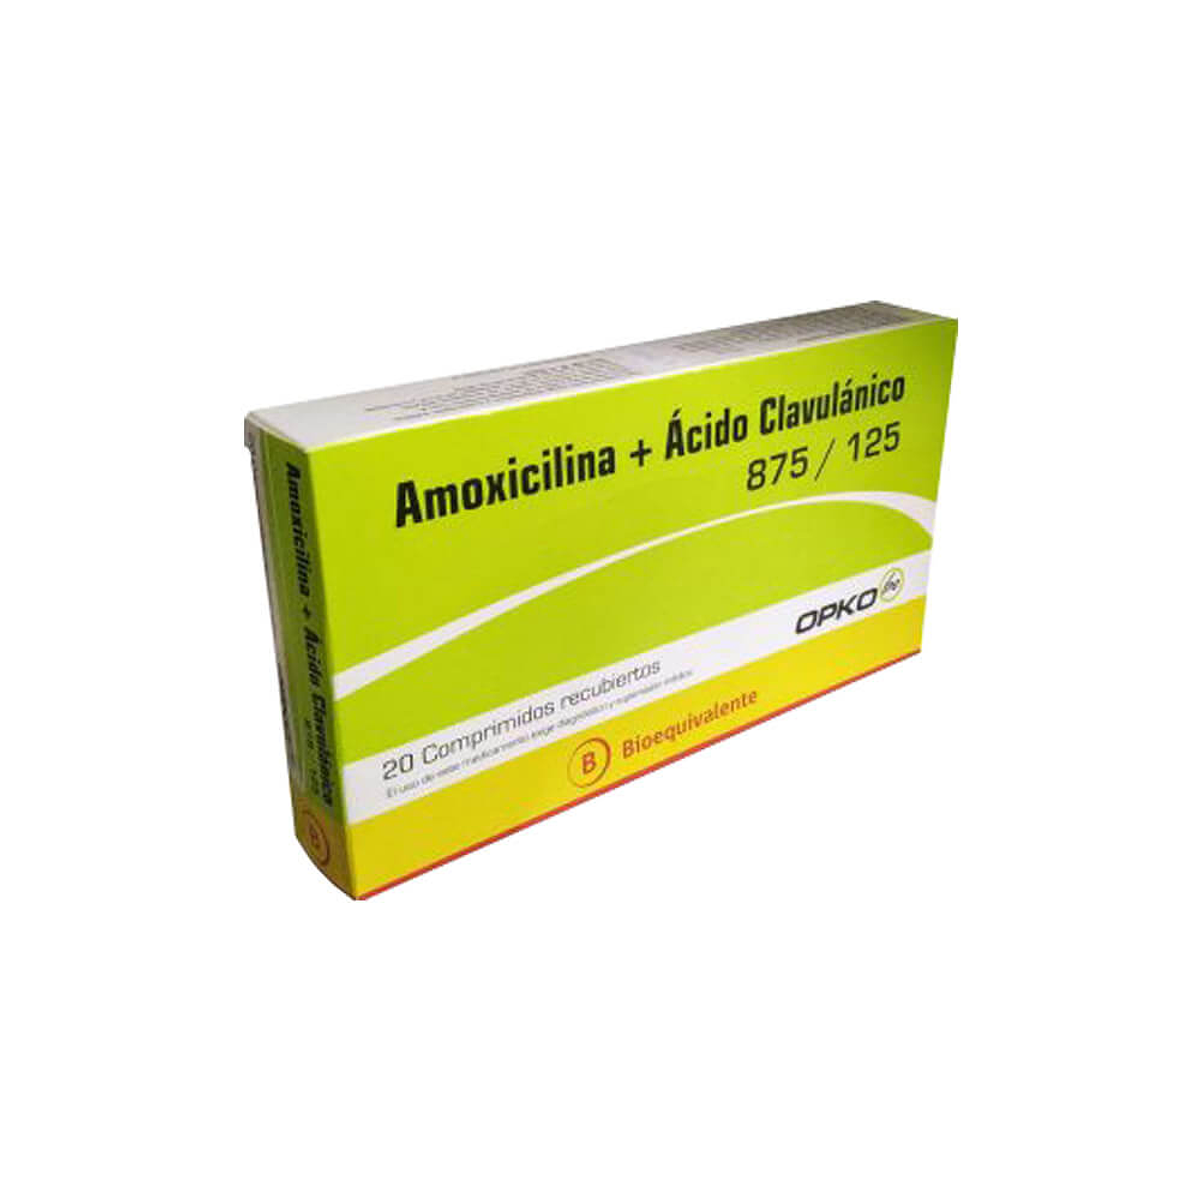 Amoxicilina + acido clavulanico 875/125